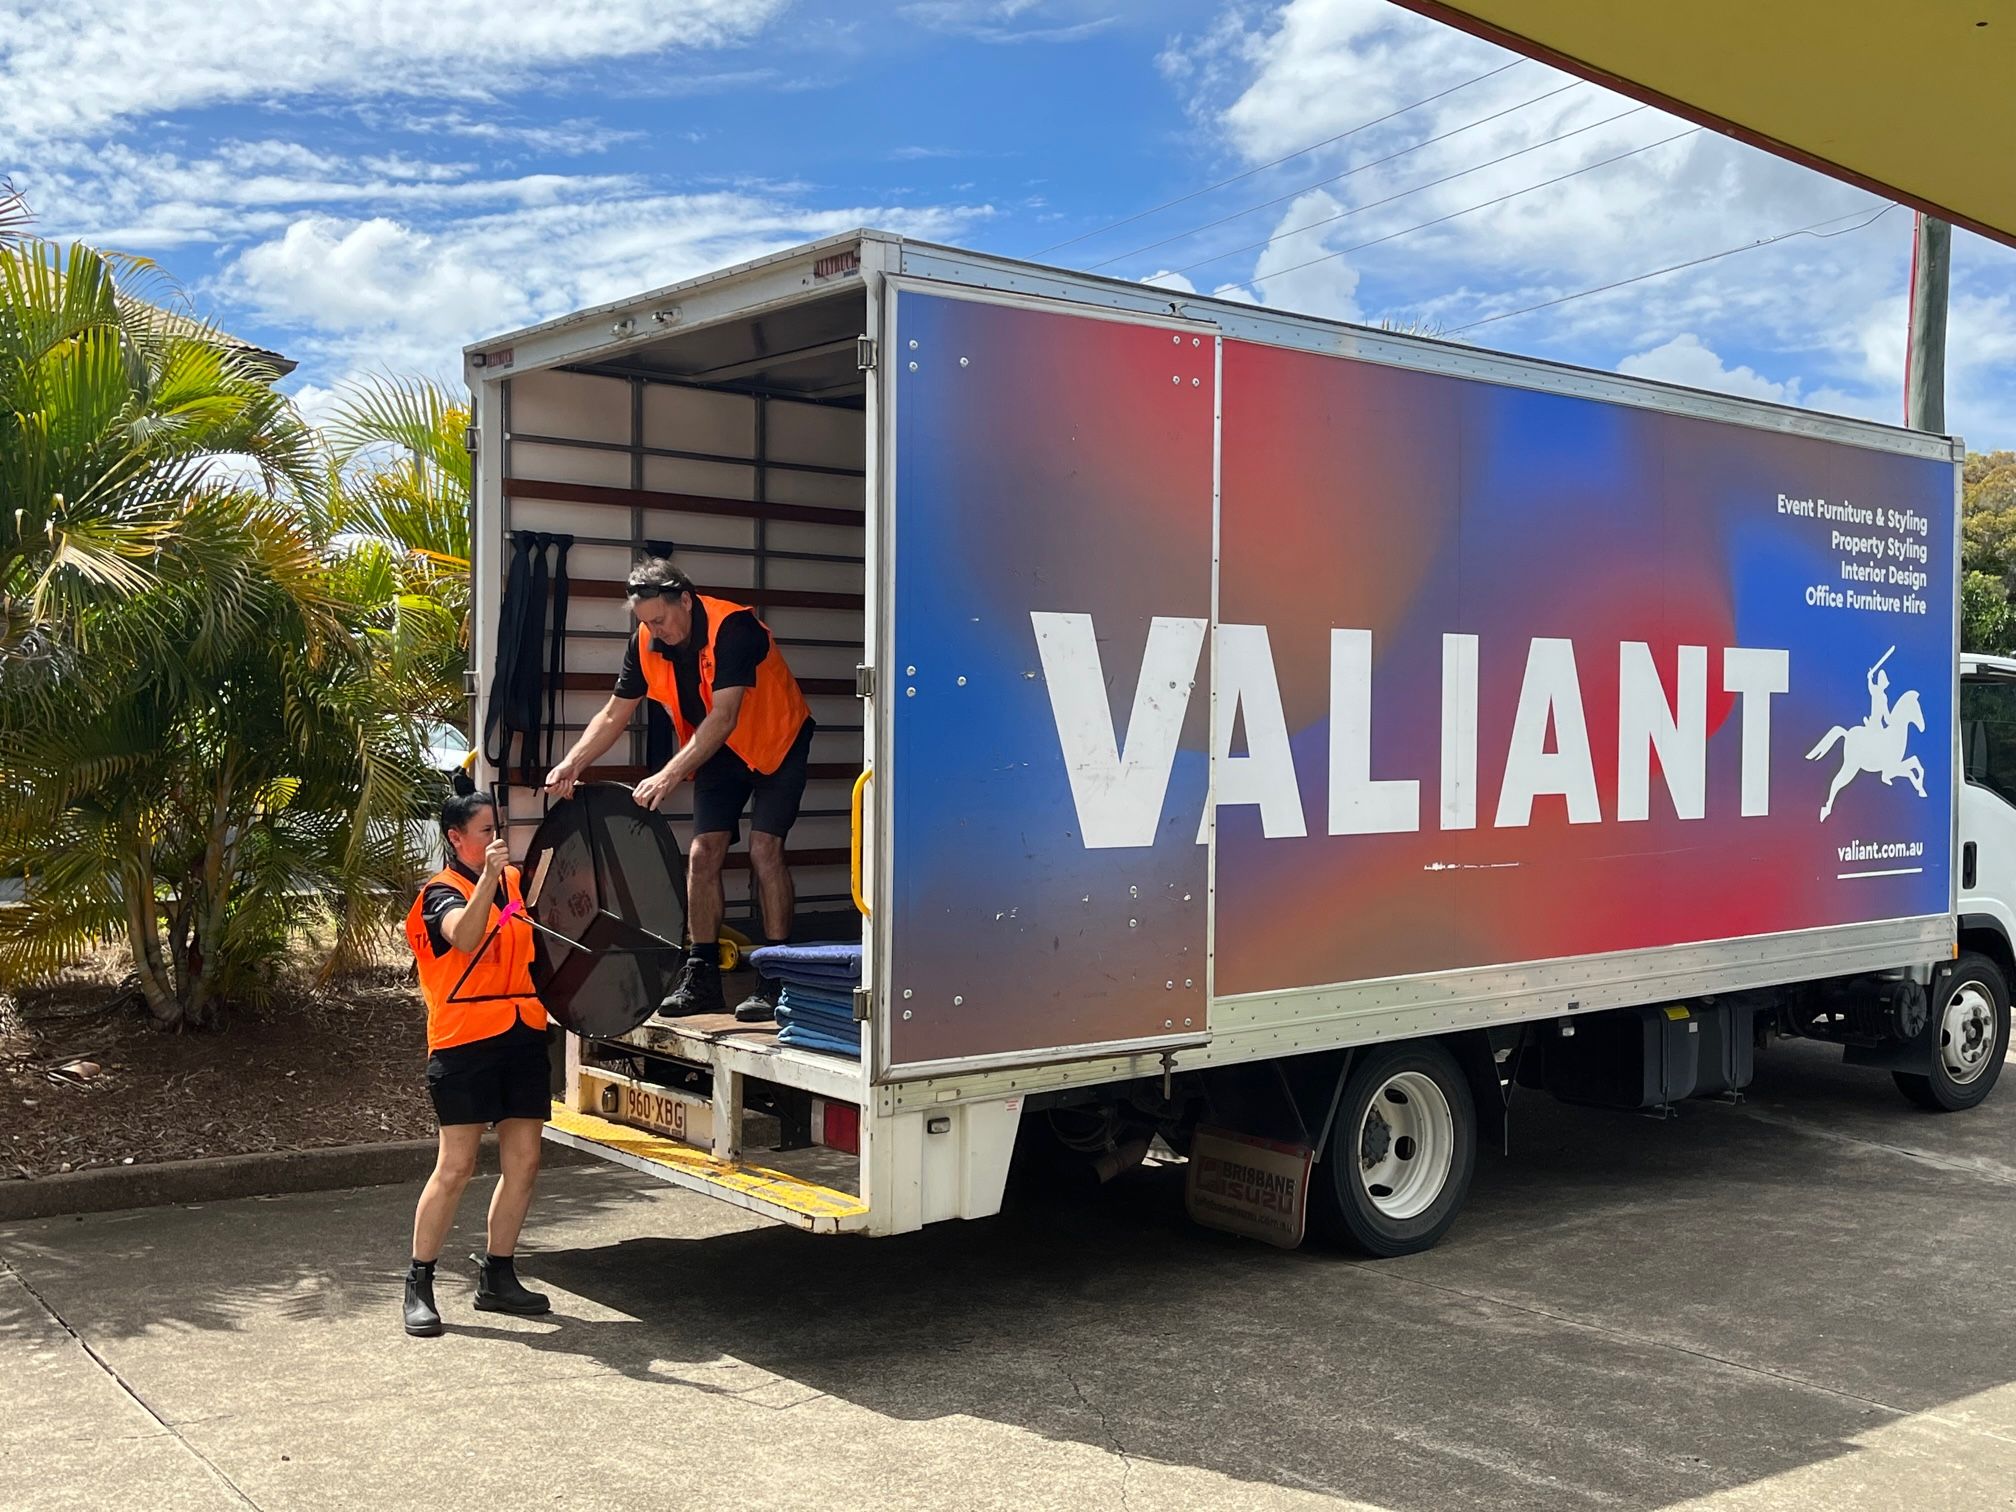 Truck delivering donated furniture